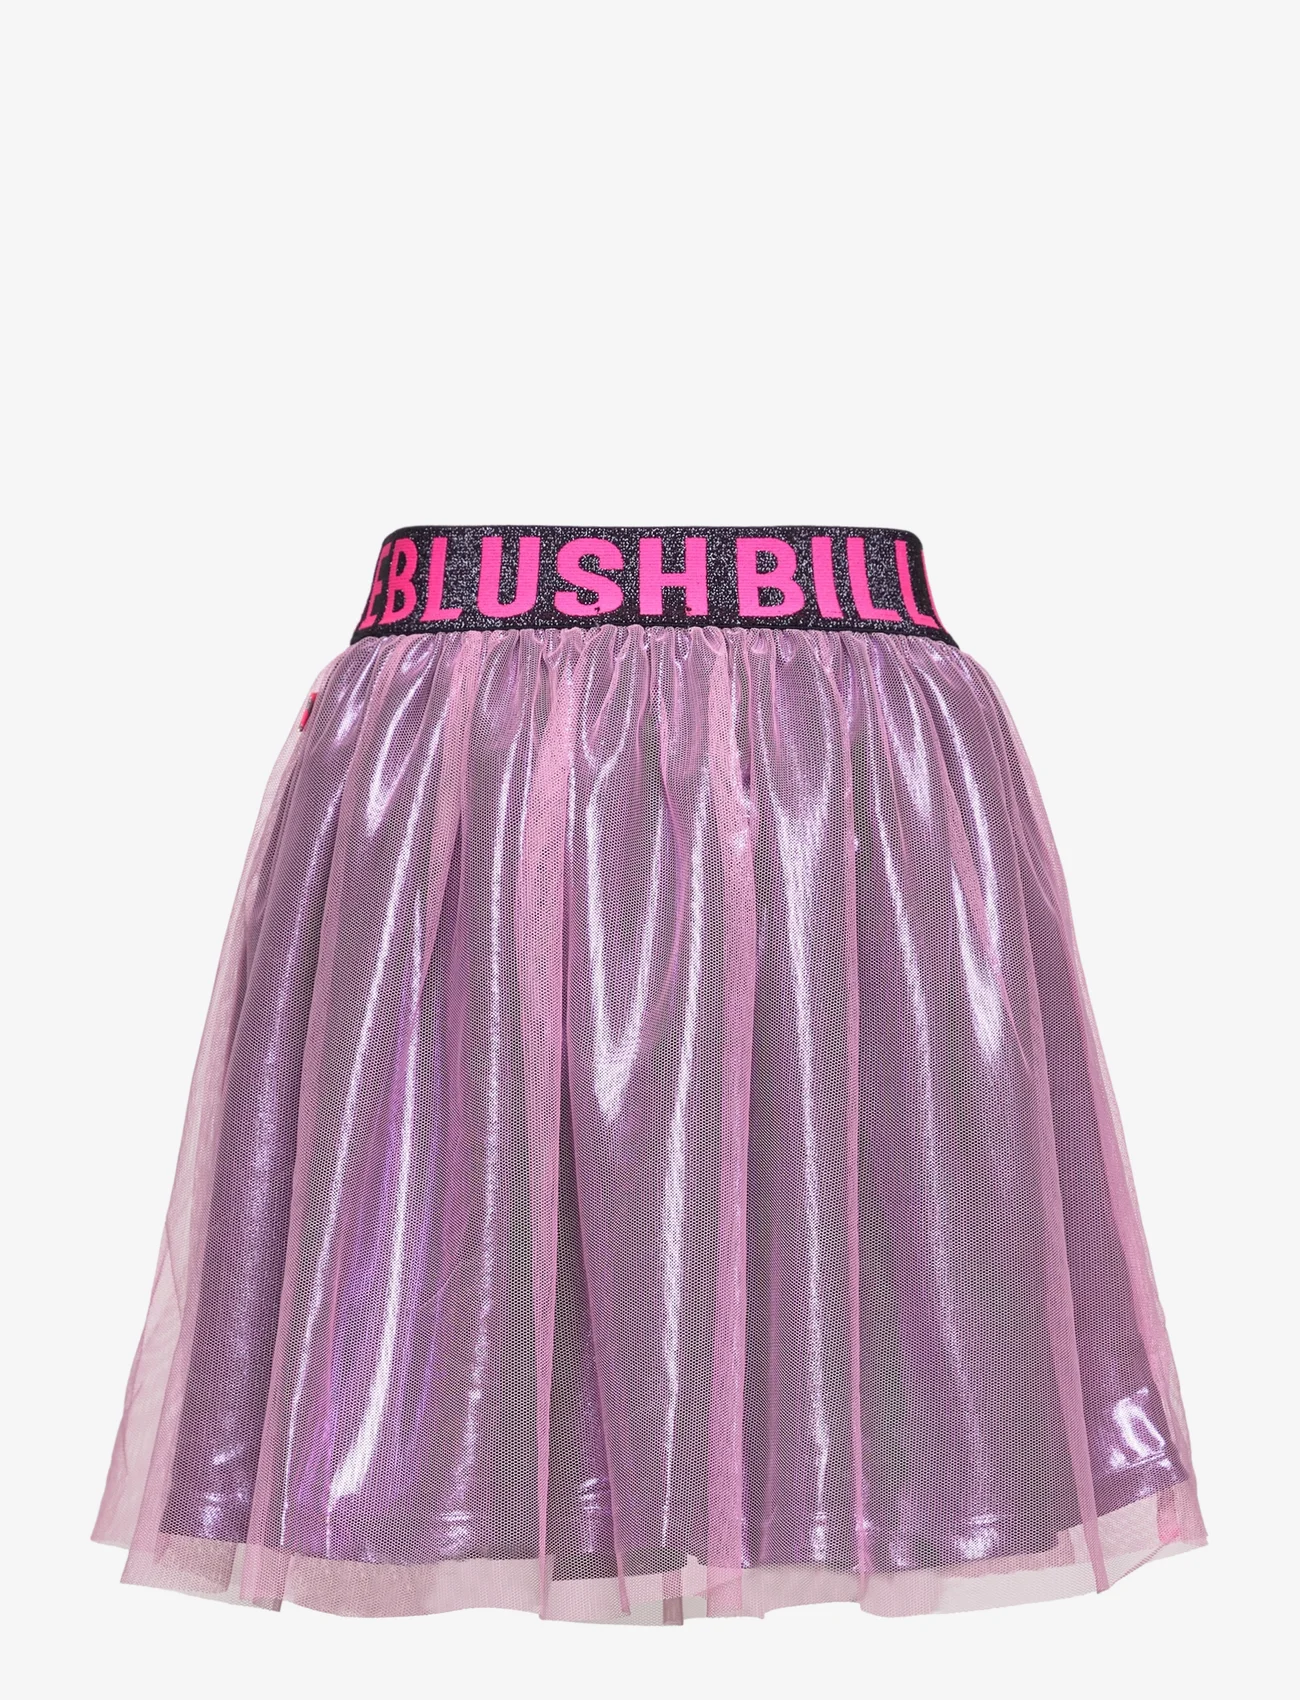 Billieblush - SKIRT - tulle skirts - pink - 1